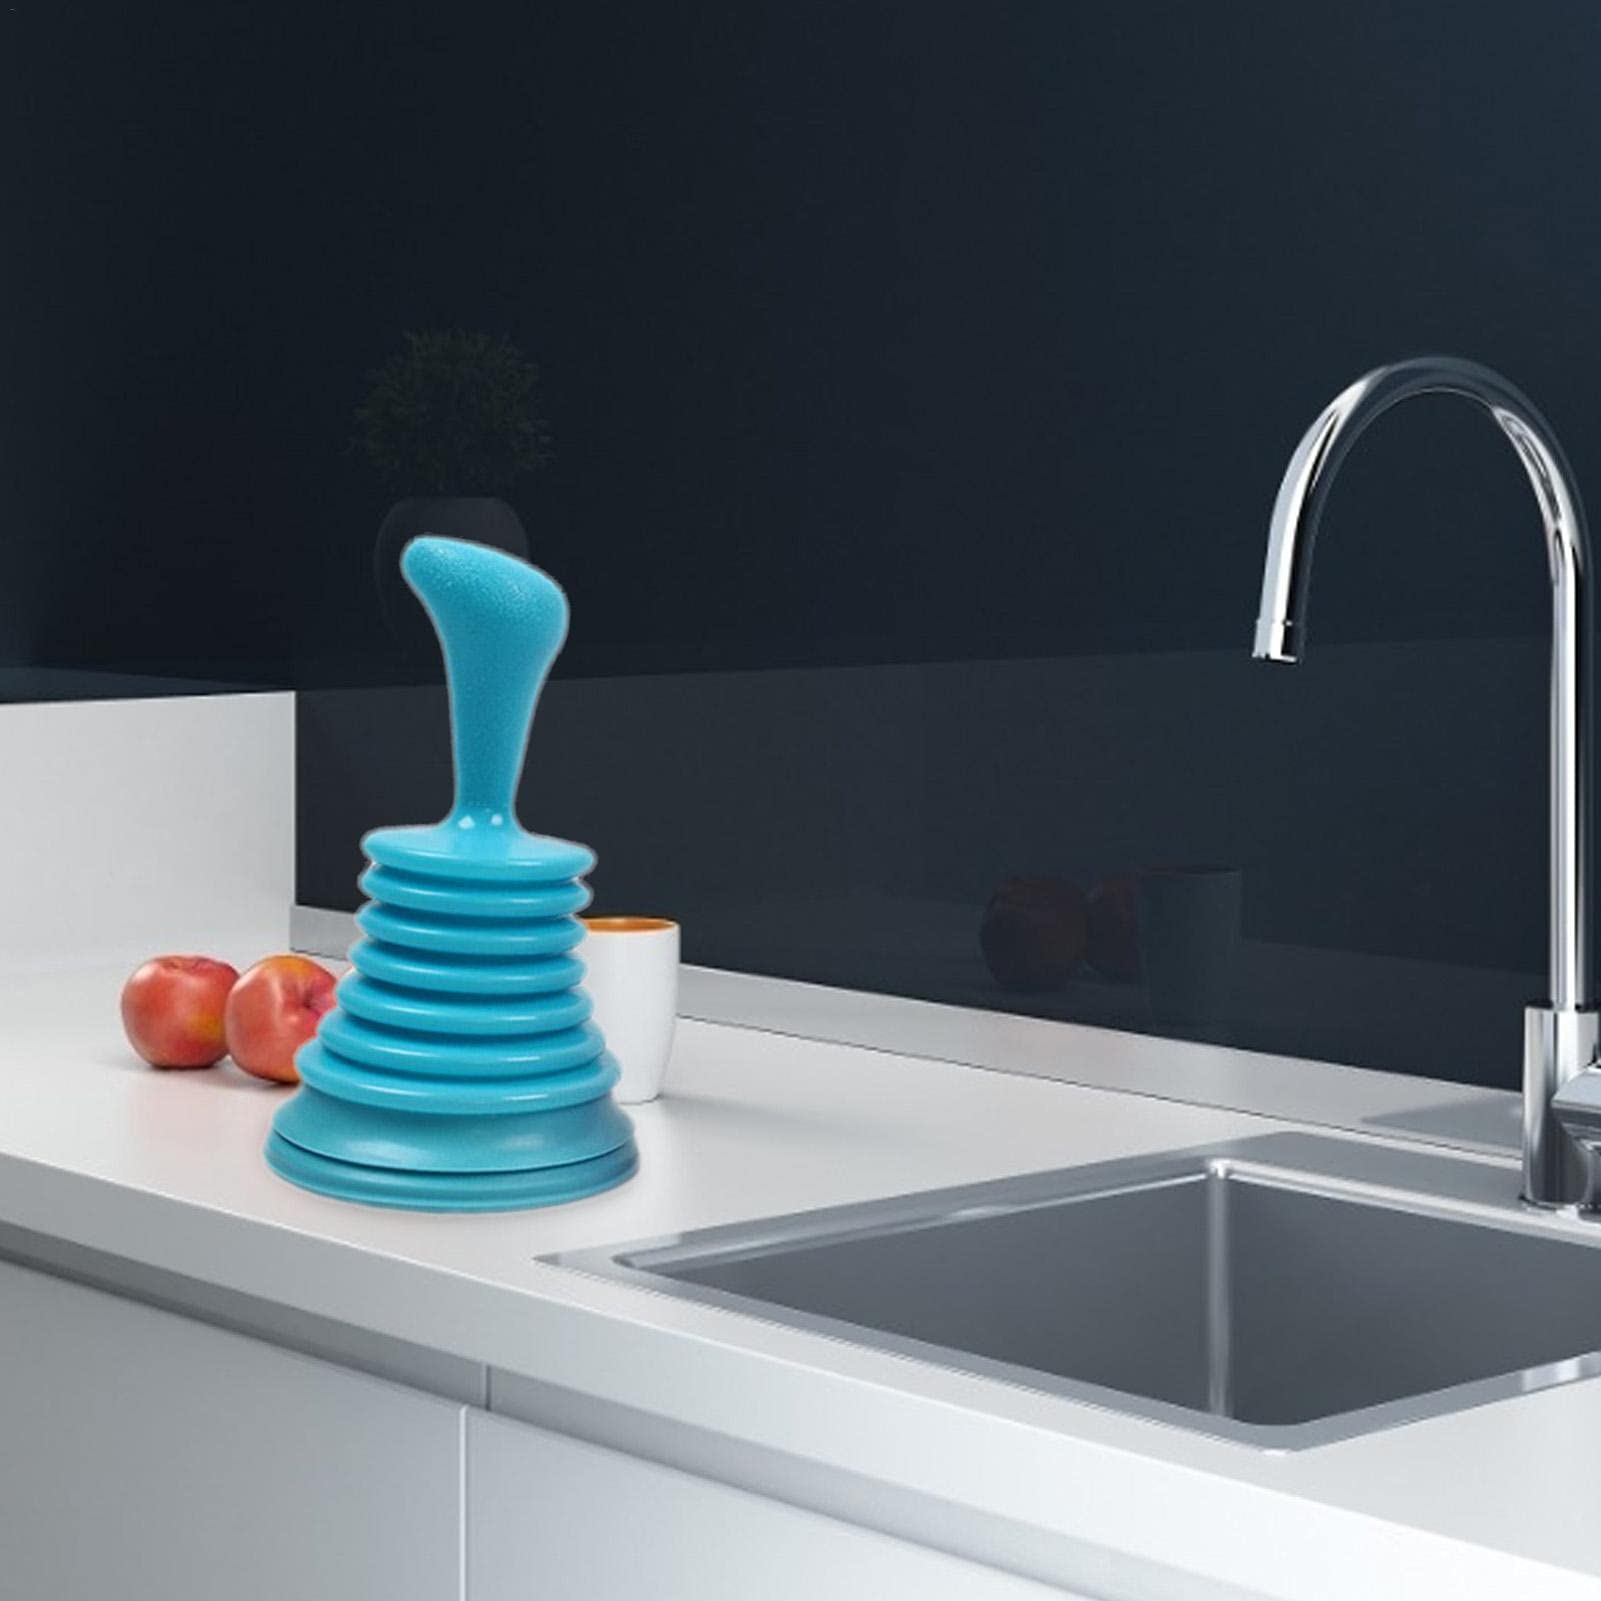 Sink and Drain Plunger for Bathrooms Drain Plunger for Kitchen Sinks, Bathroom Sinks, Showers, and Bathtubs